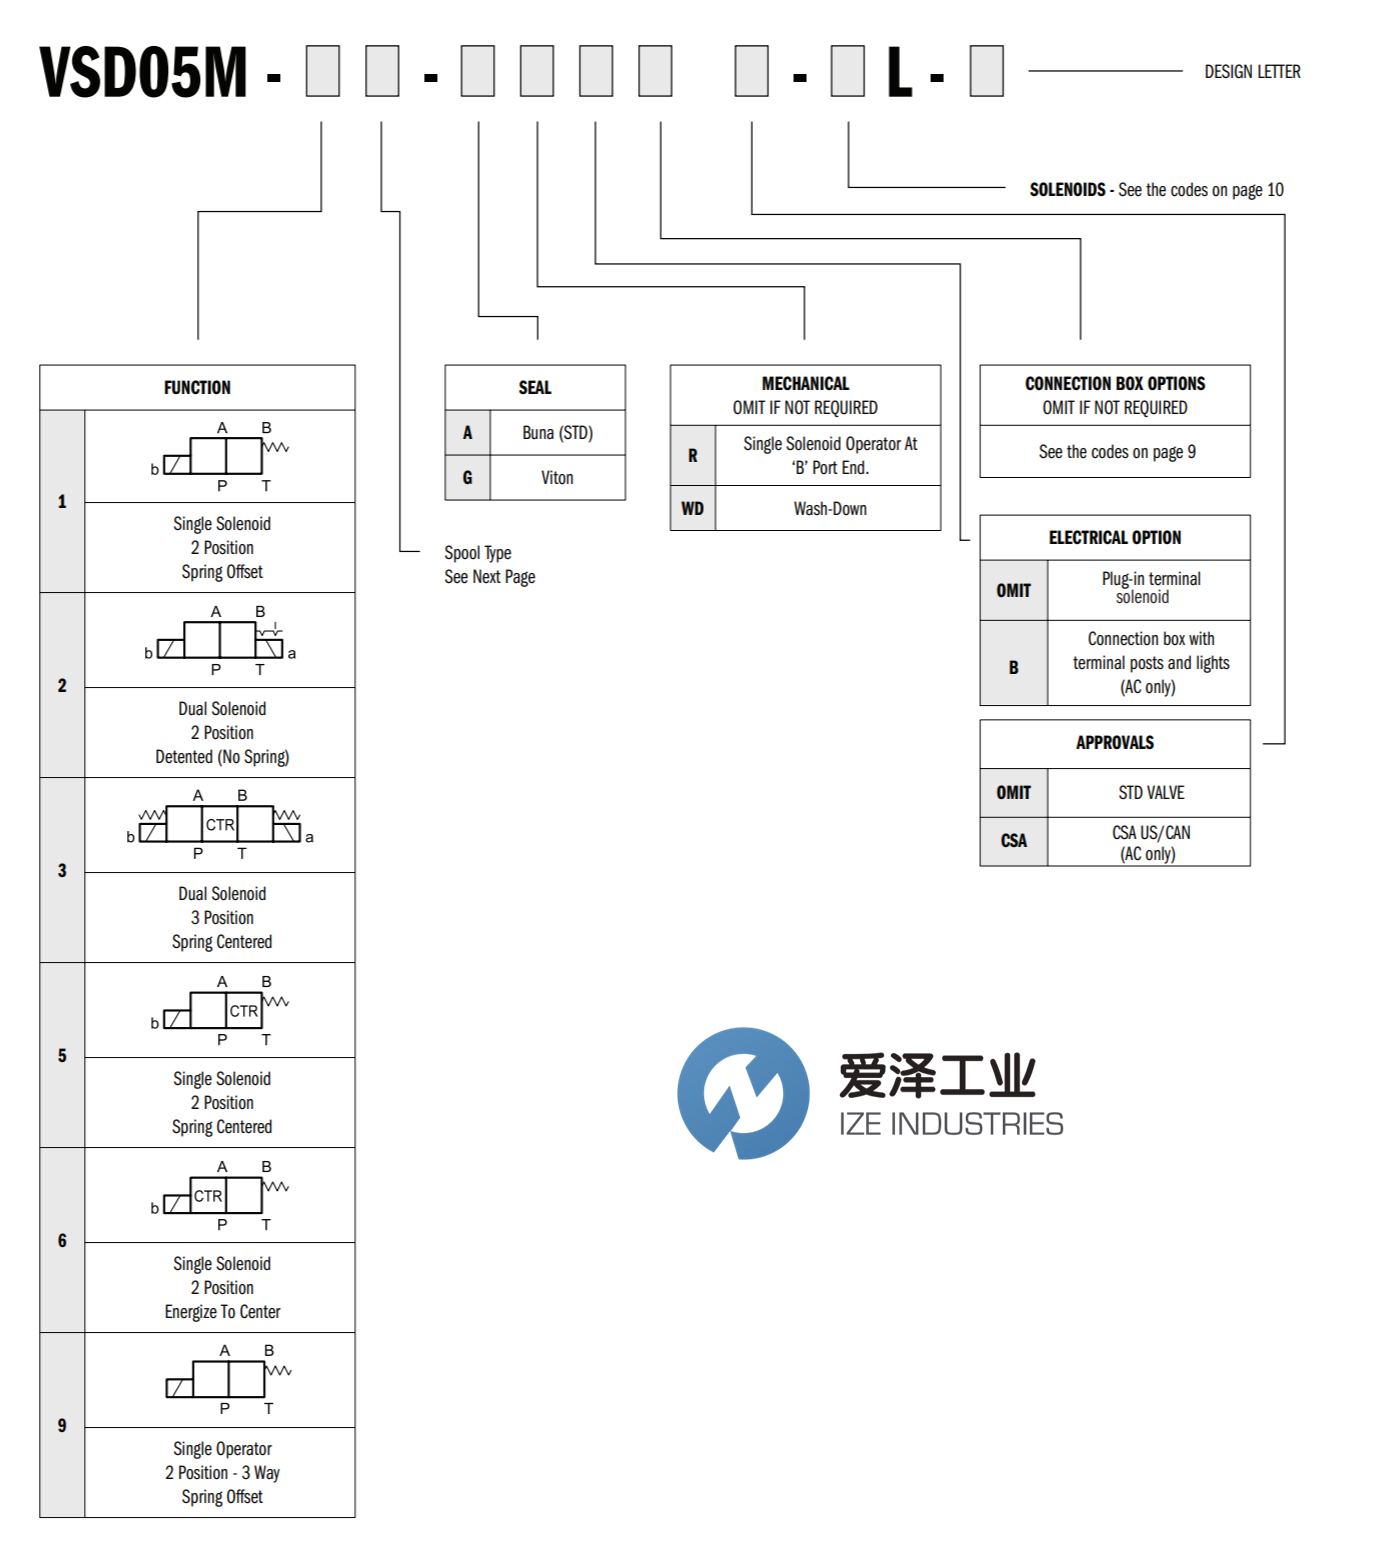 CONTINENTAL HYORAULICS电磁阀VSD05M系列 爱泽工业 izeindustries（1）.png